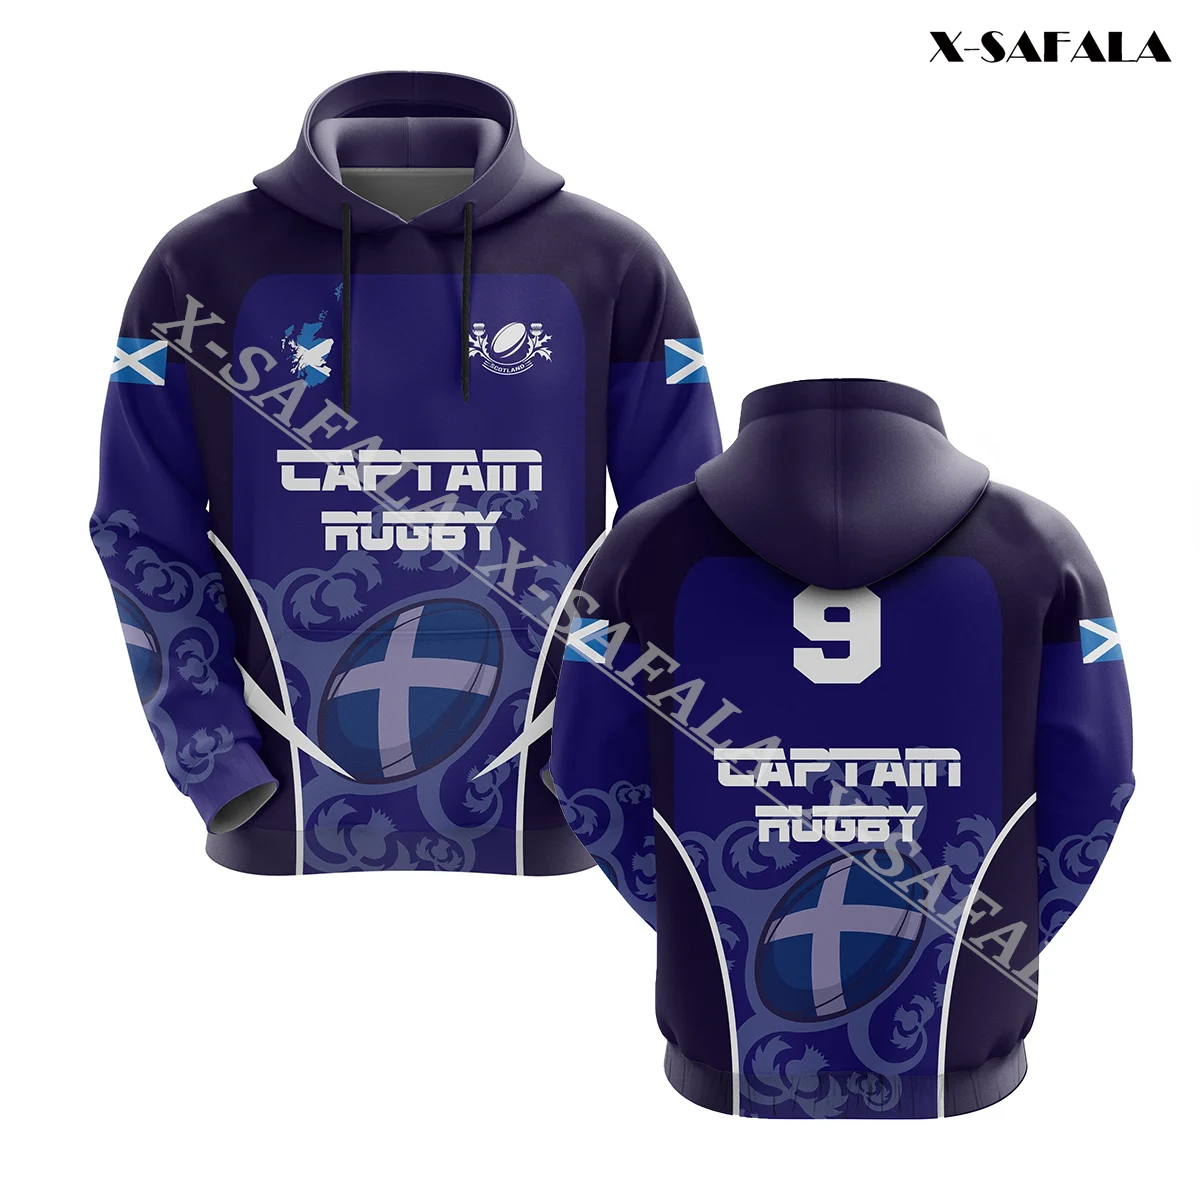 

Laidlaw Scotland Rugby Captain Custom 3D Print Zipper Hoodie Men Pullover Sweatshirt Hooded Jersey Tracksuits Outwear Coat